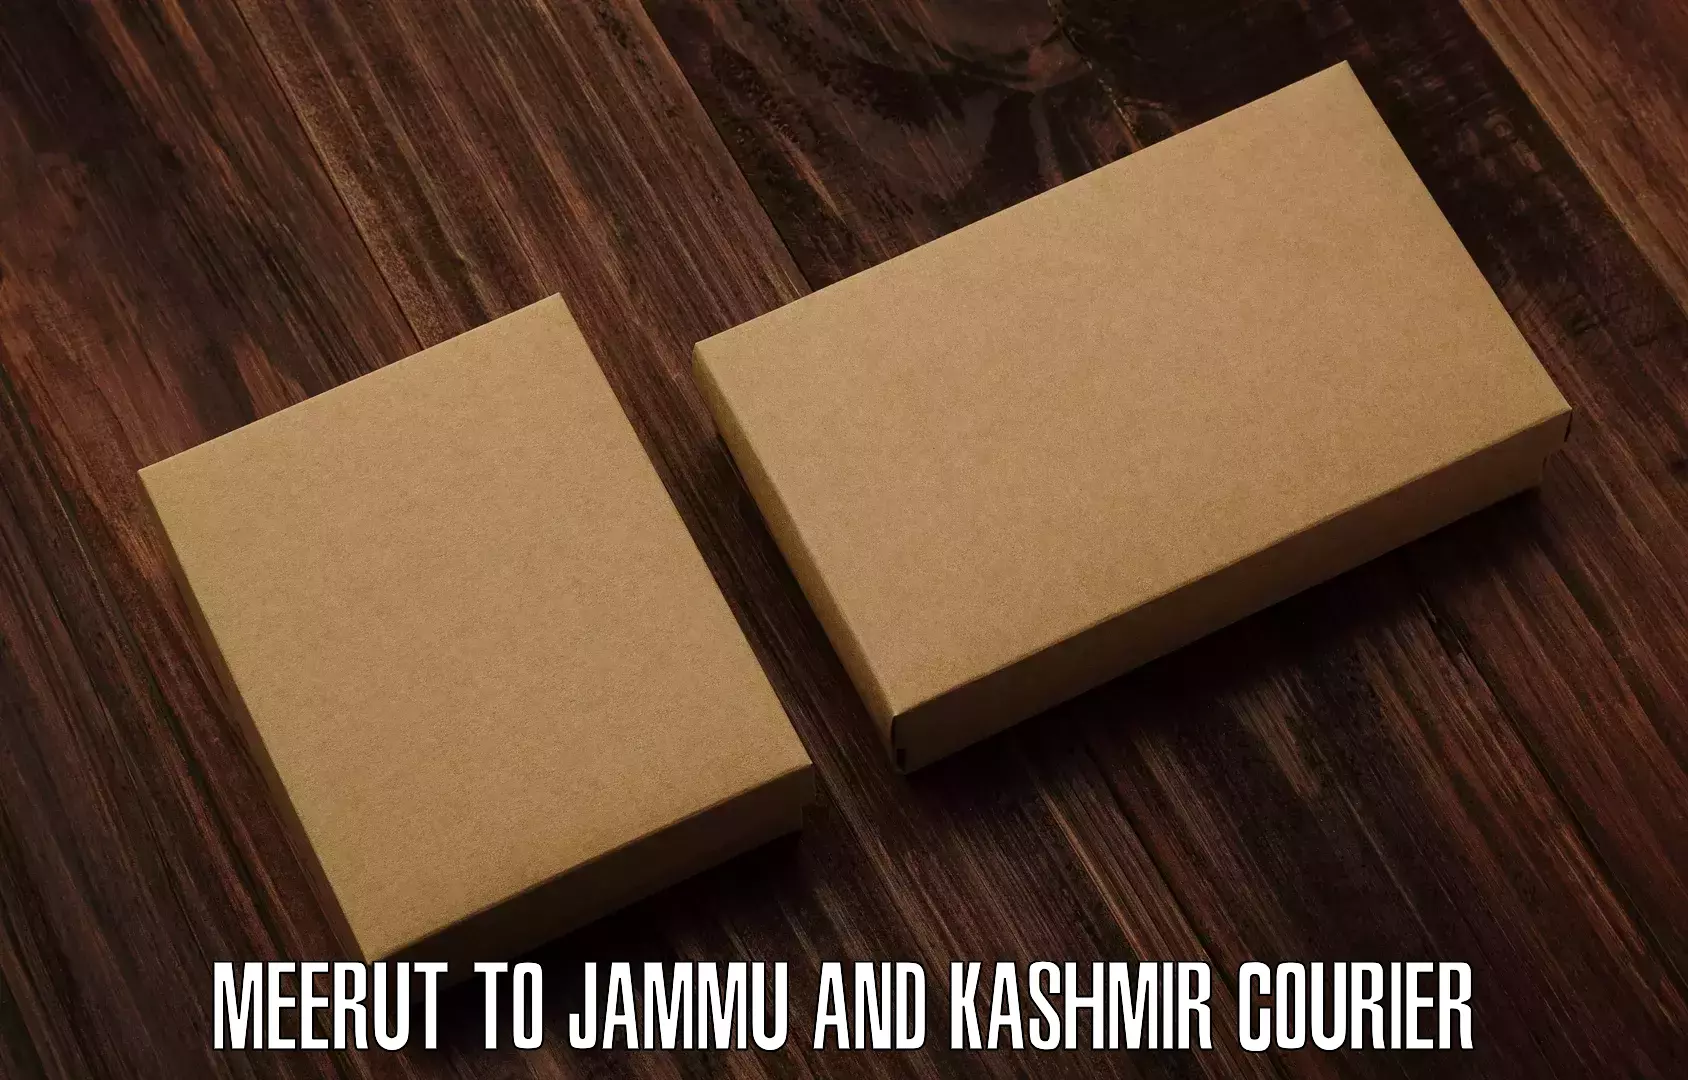 24-hour courier service Meerut to Srinagar Kashmir